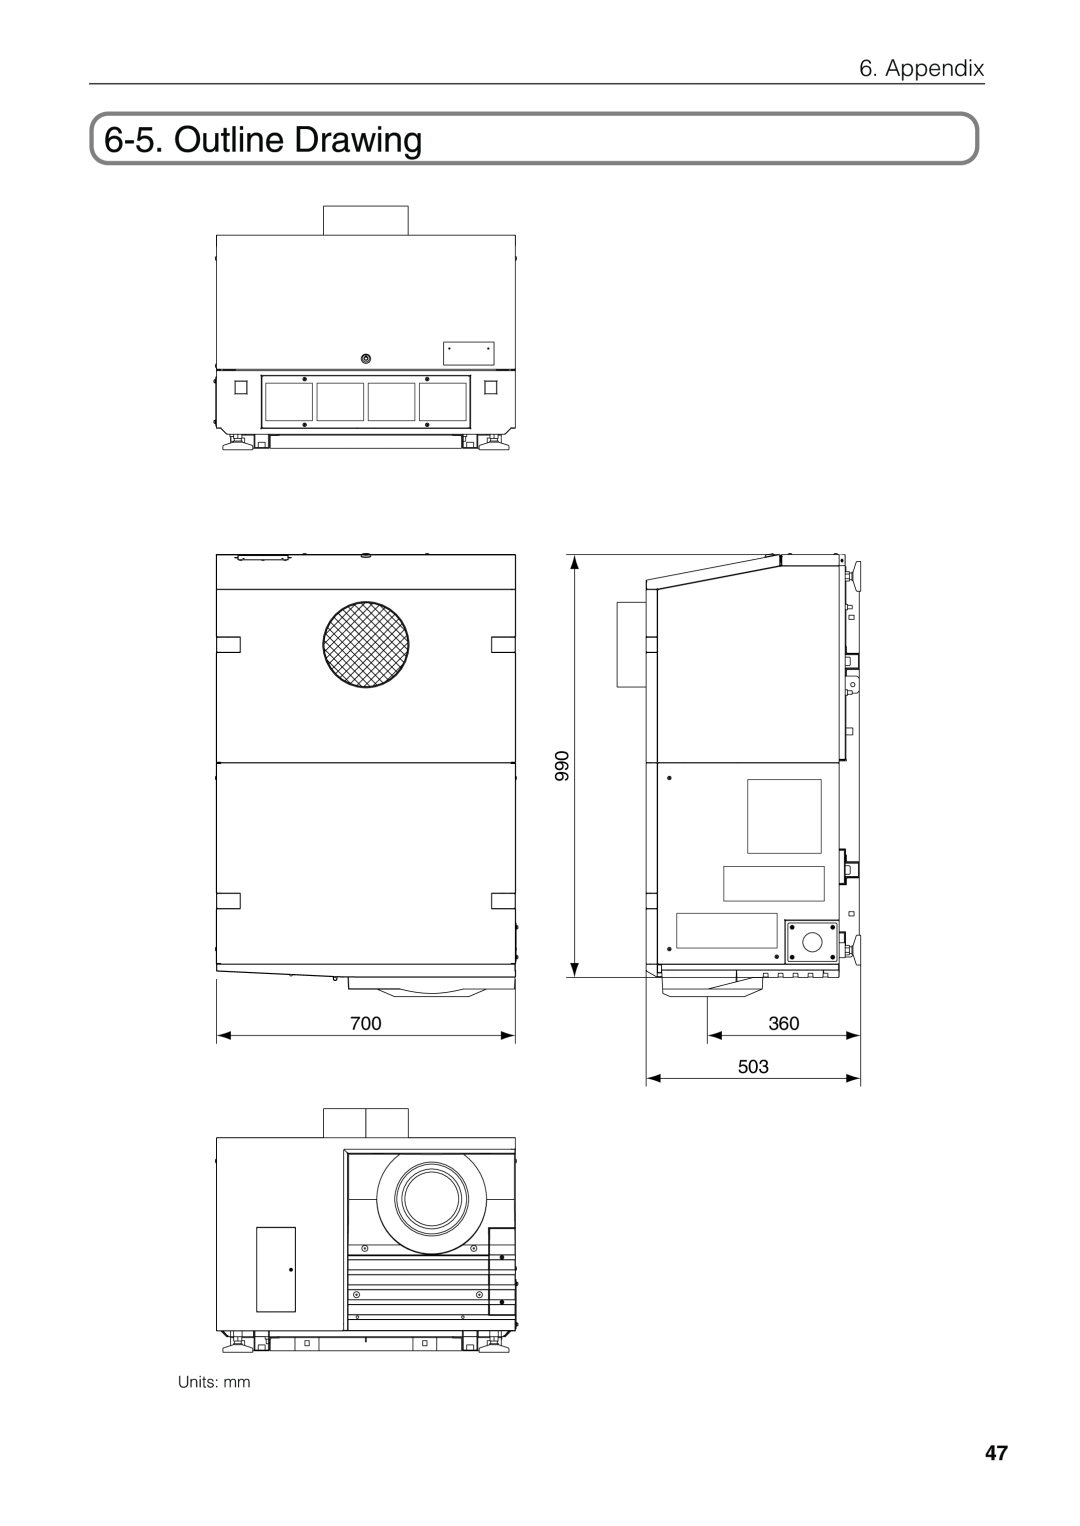 NEC NC1600C user manual Outline Drawing, Appendix, 990, Units mm 